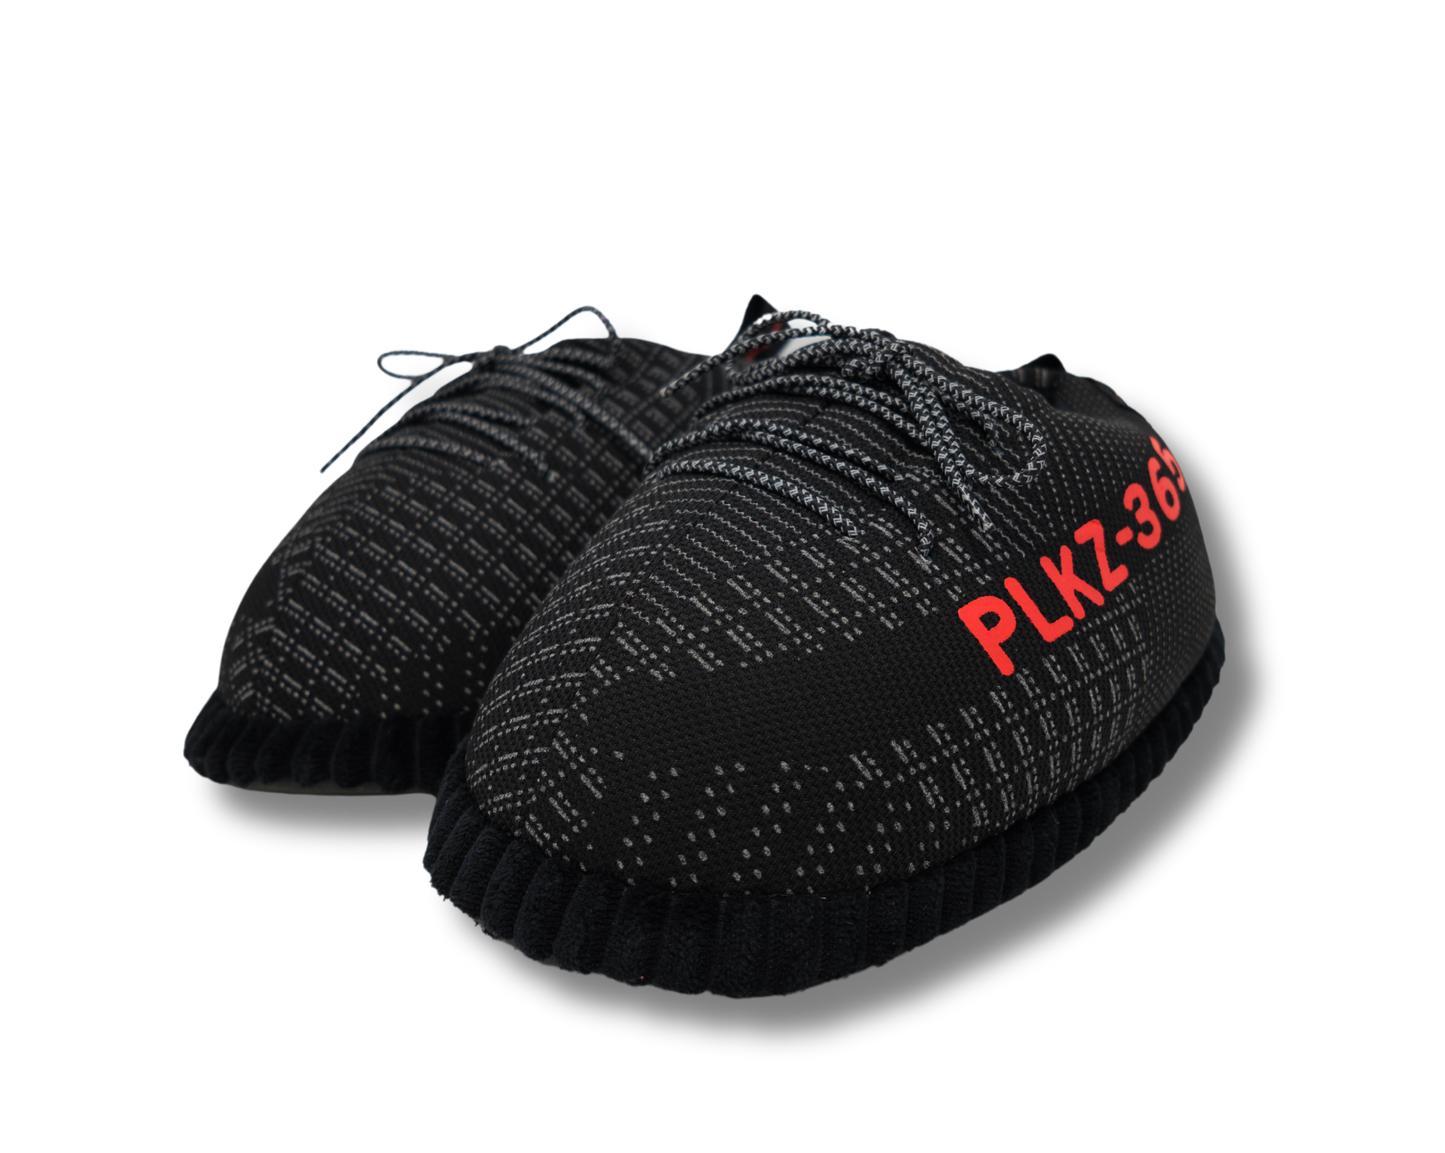 Plush Kickz PLKZ 365's - Black Reflective & Red